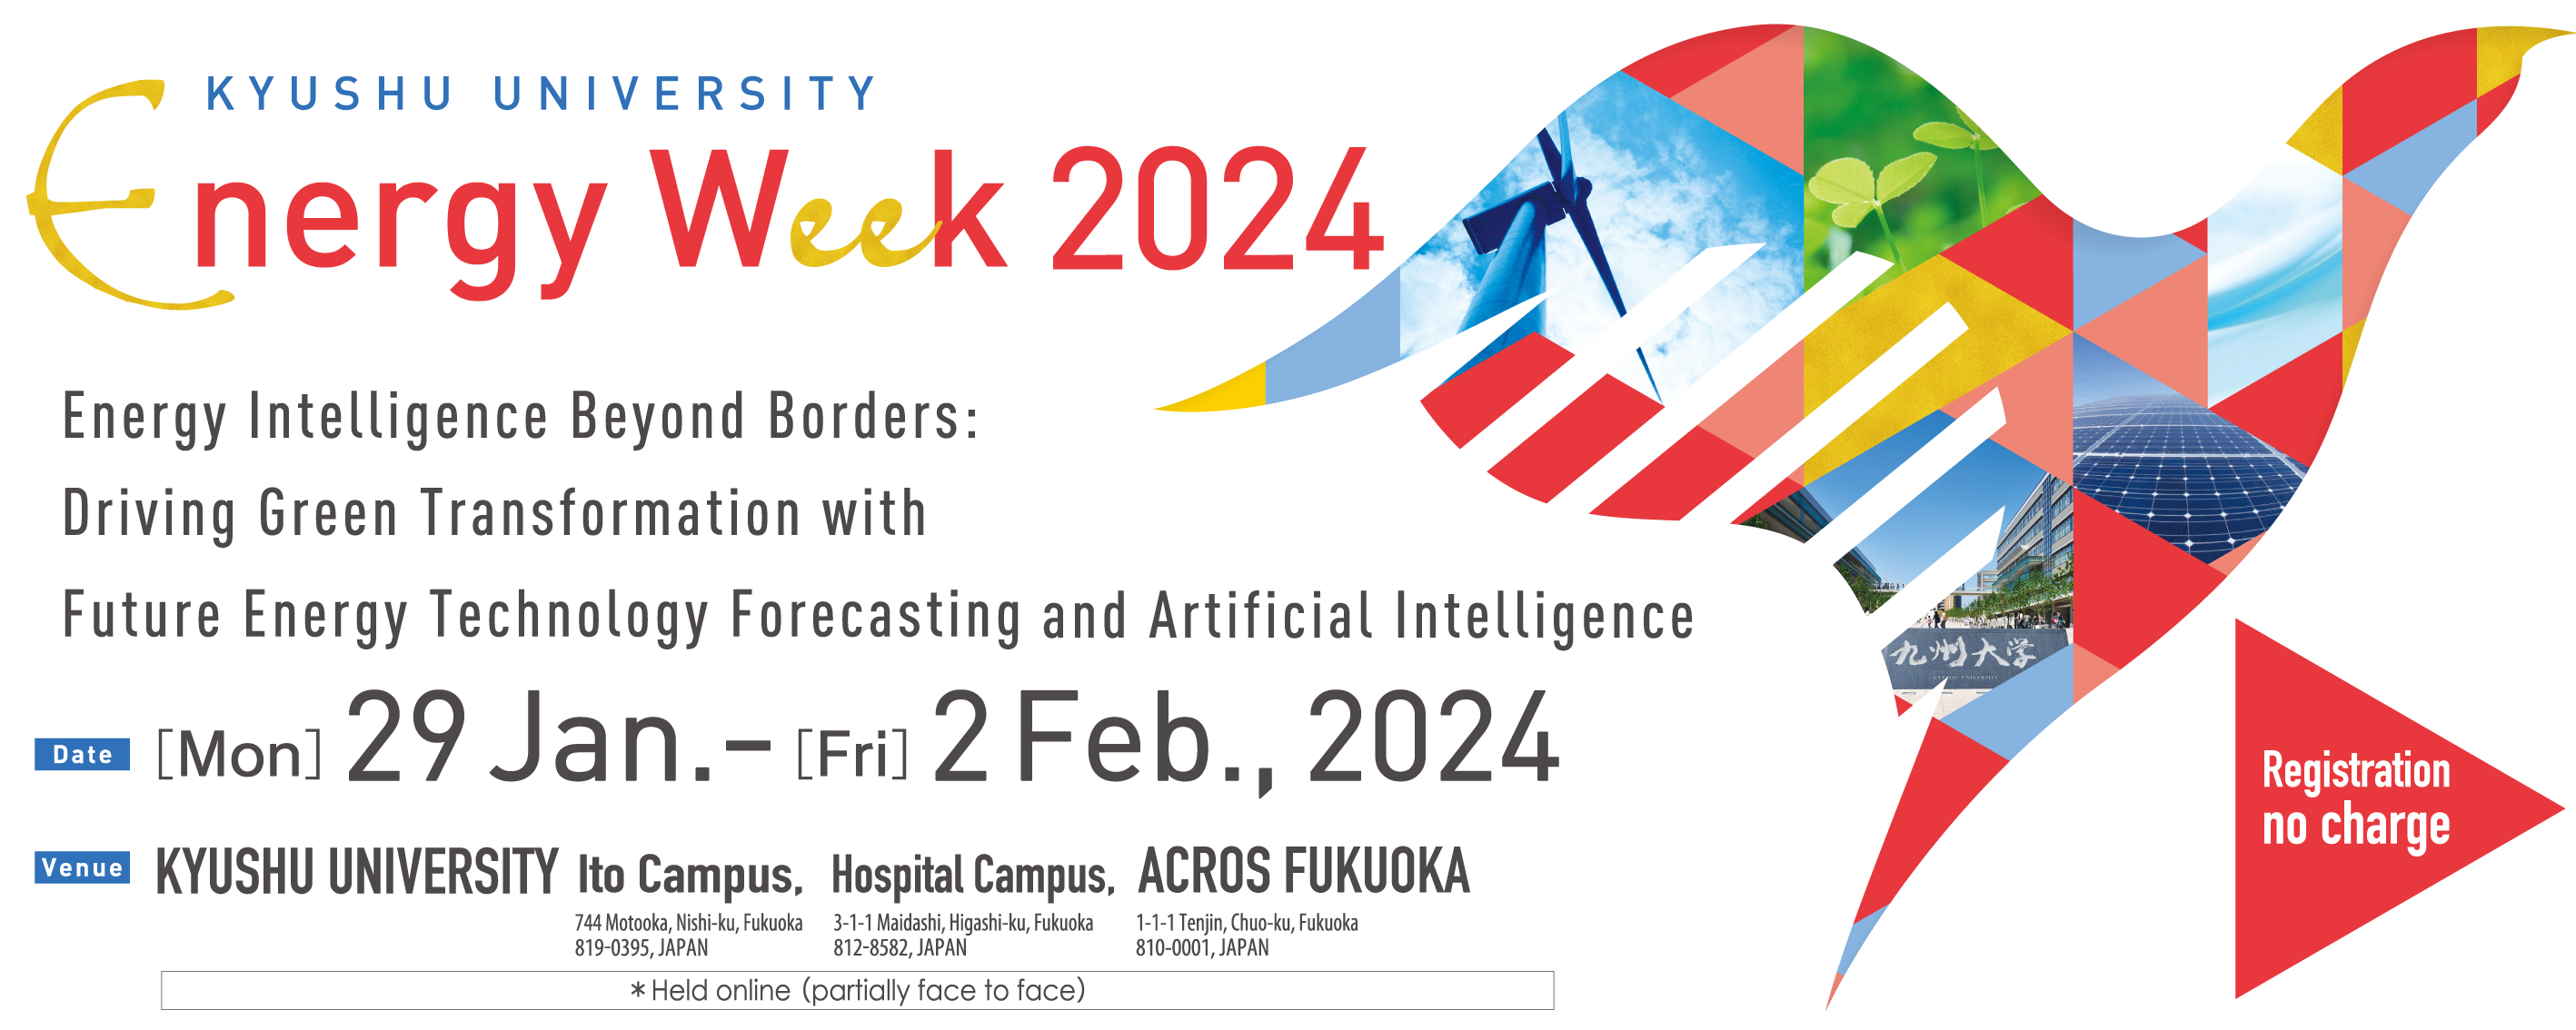 Kyushu University Energy Week 2022